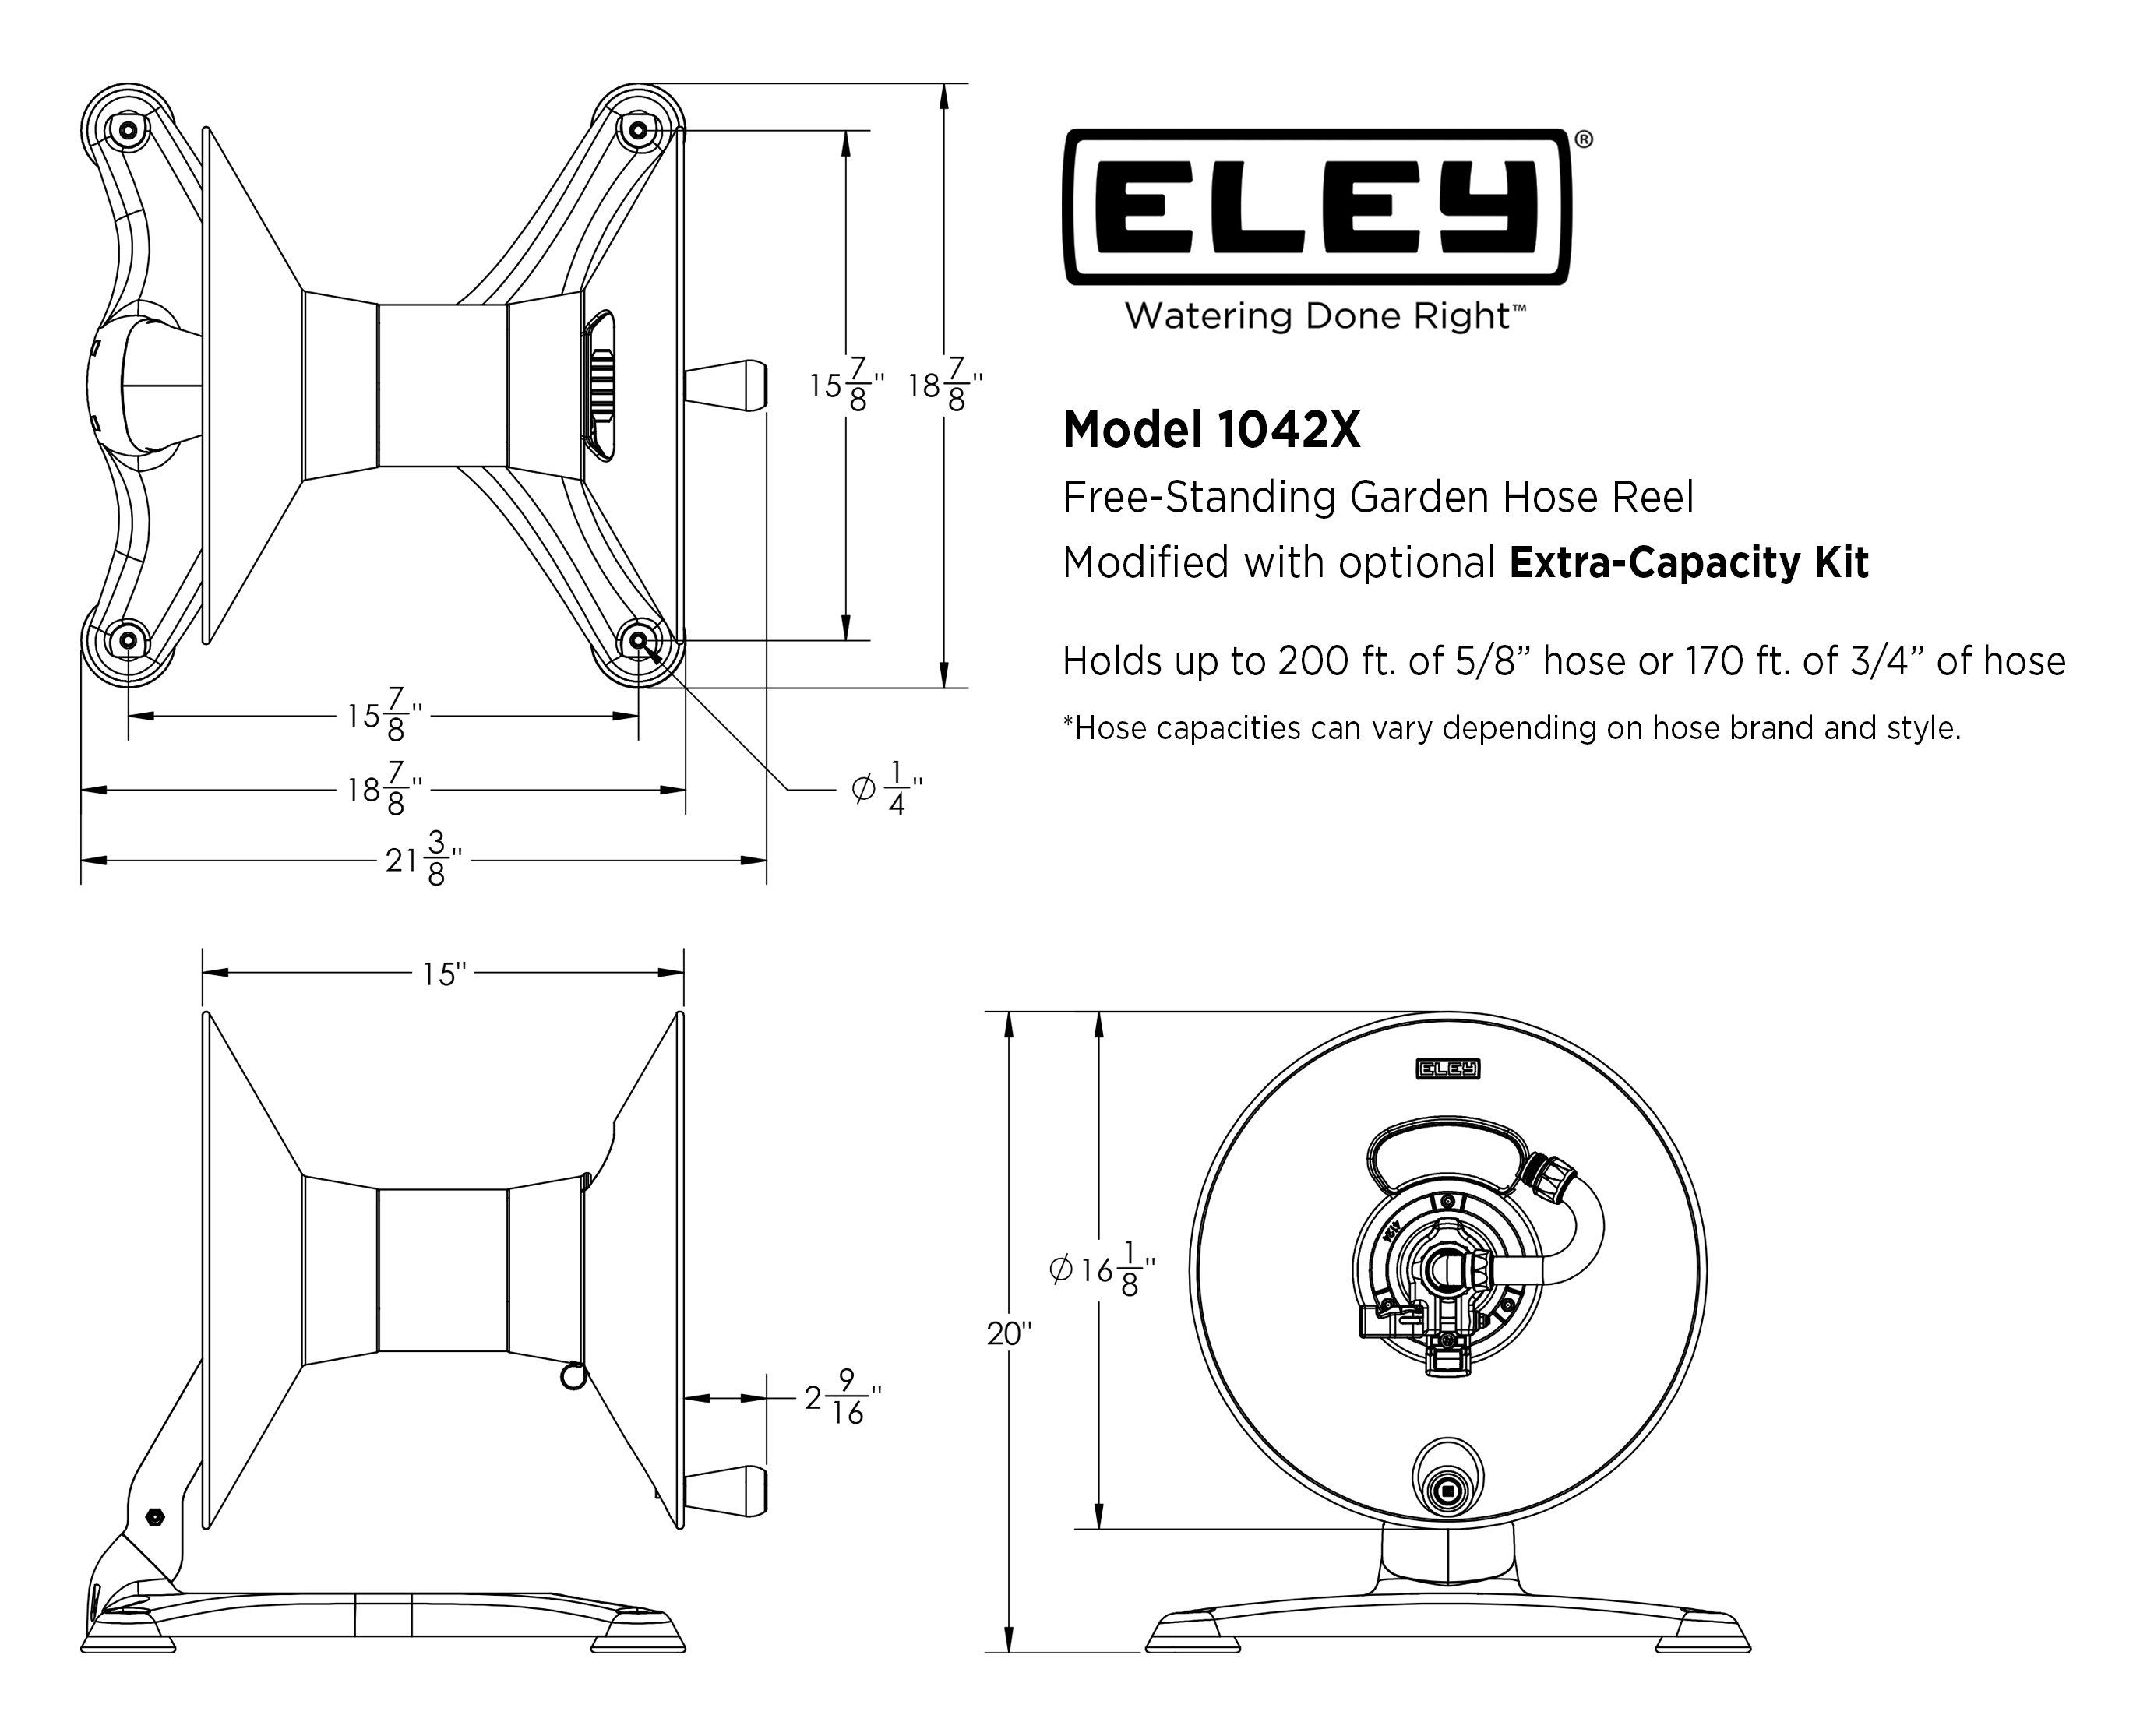 ELEY Model 1042X free-standing garden hose reel dimensions